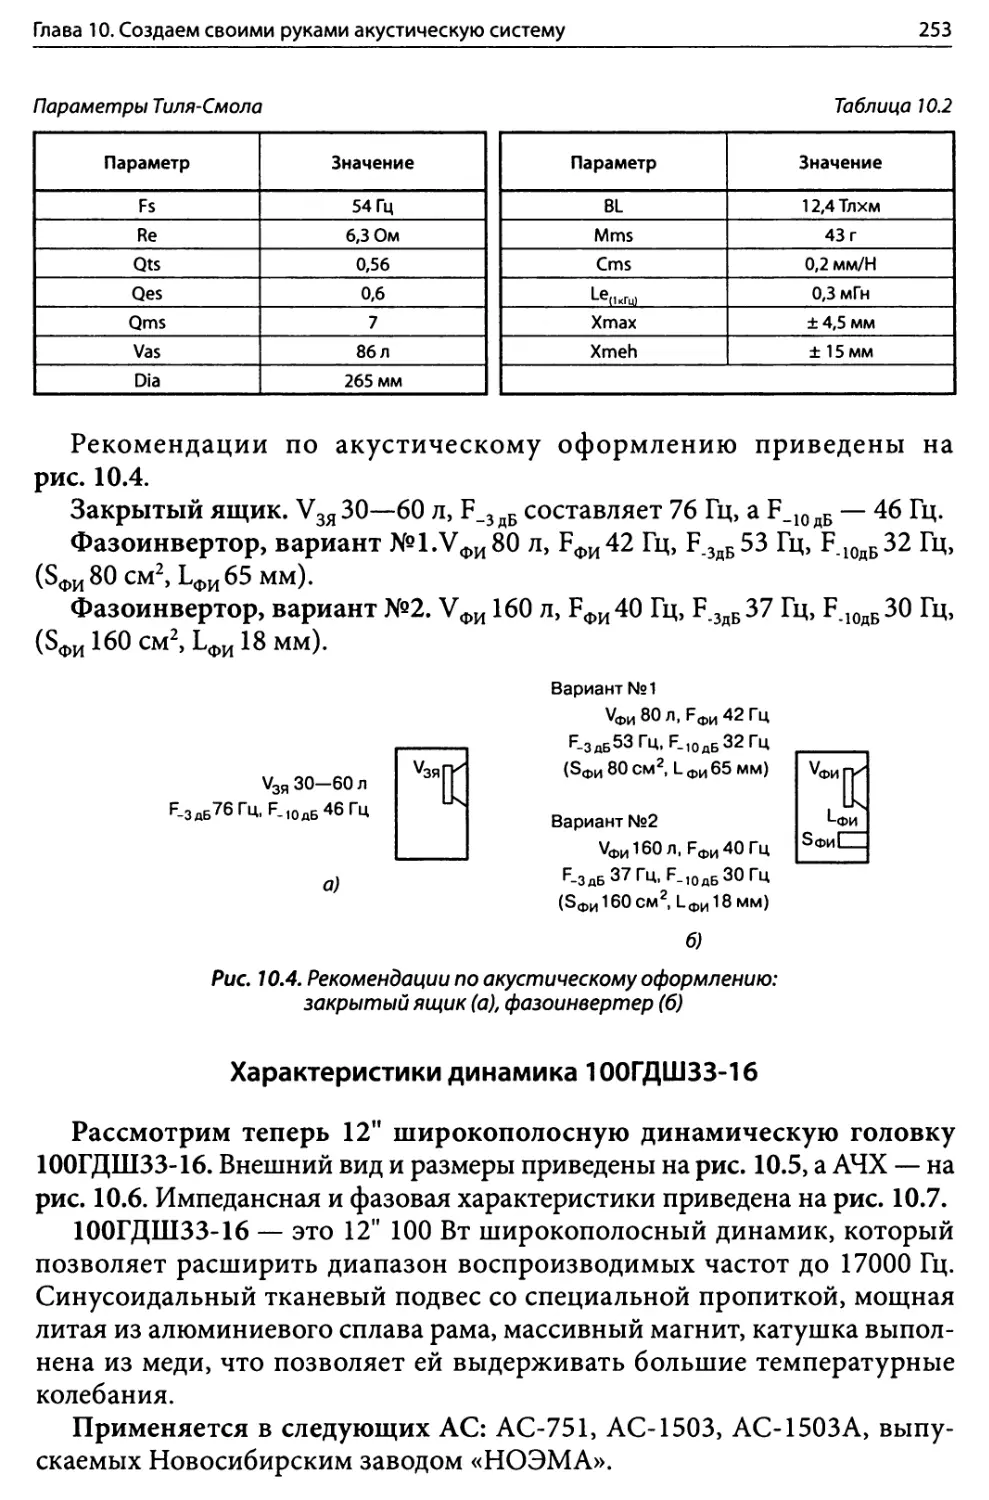 Характеристики динамика 100ГДШ33-16